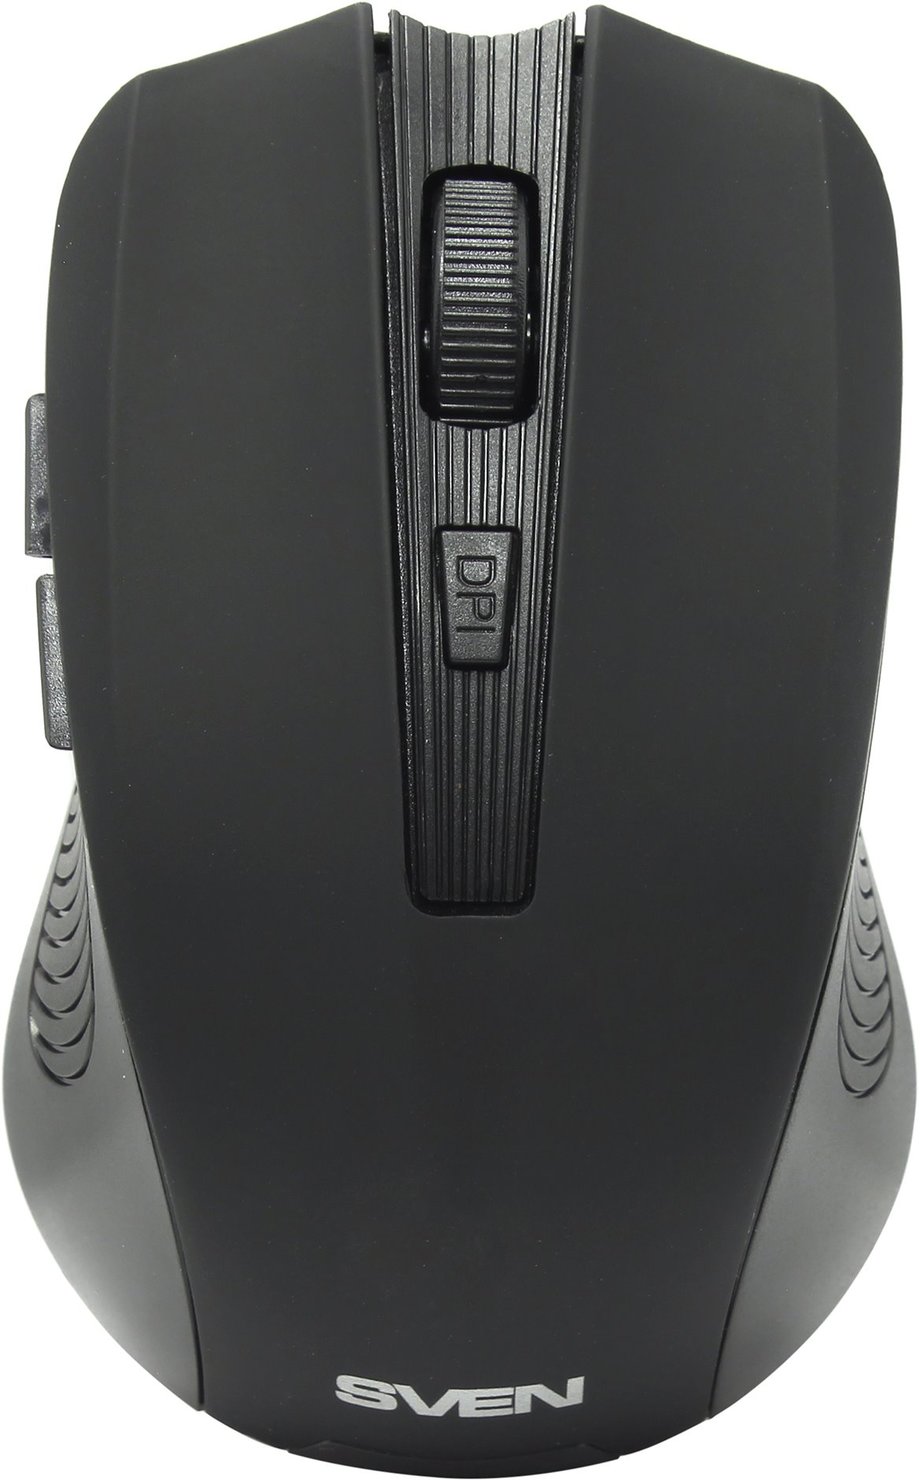 Мышь SVEN RX-345 Wireless, беспроводная, black, USB